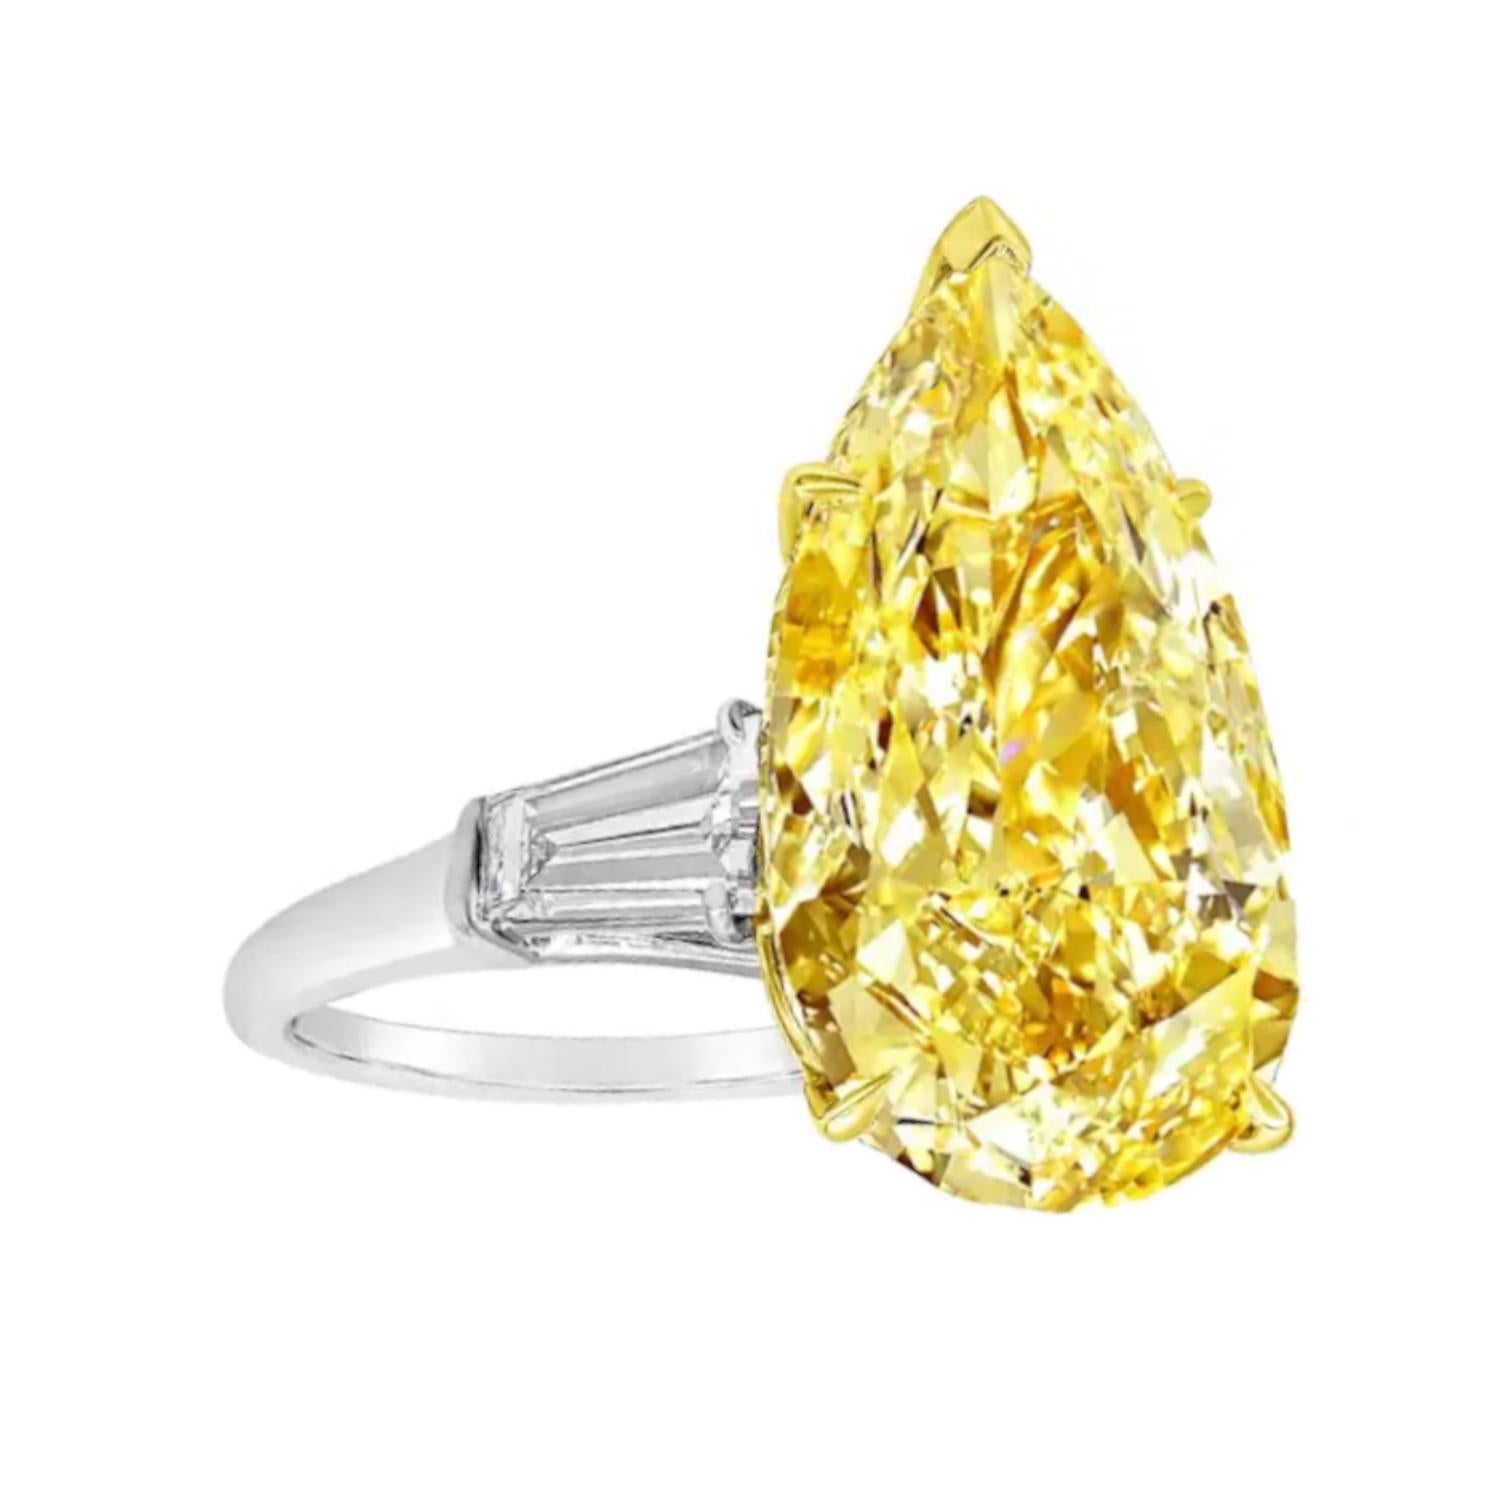 Oval Cut GIA Certified Fancy Intense Yellow 13.8 Carat Pear Cut Diamond Ring For Sale